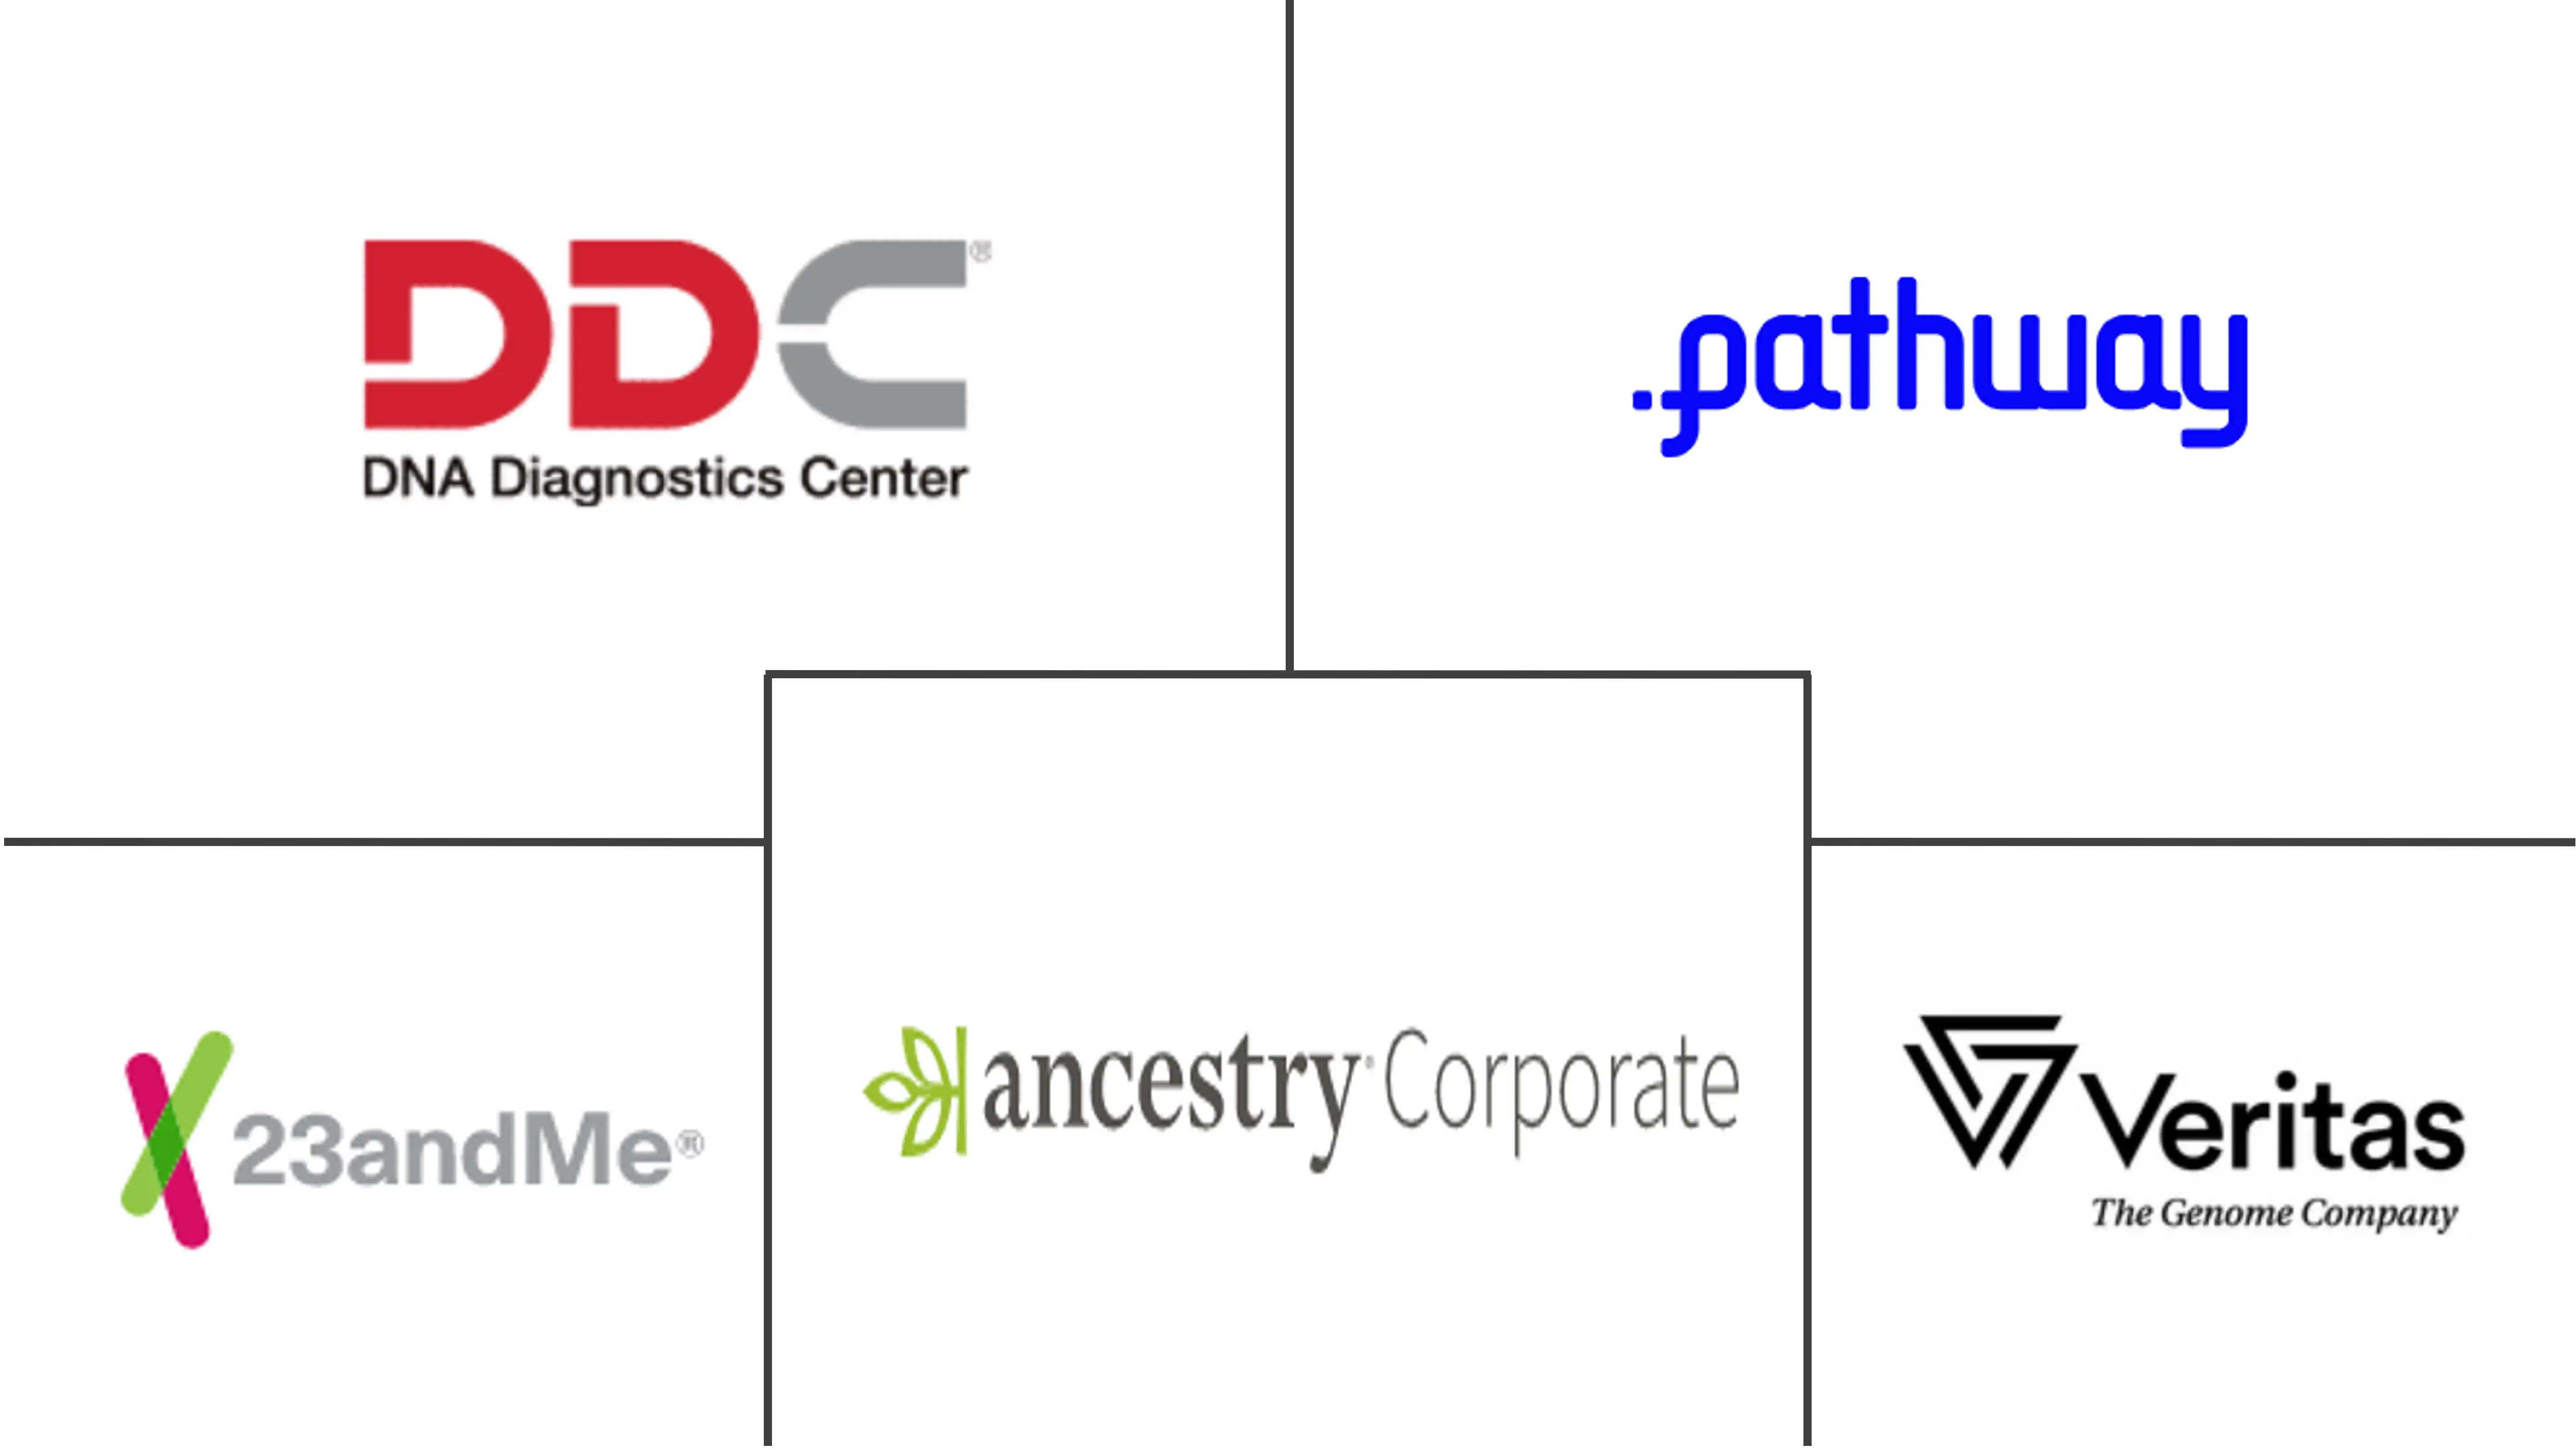  Globaler Markt für DTC-DNA-Testkits (Direct to Consumer). Major Players